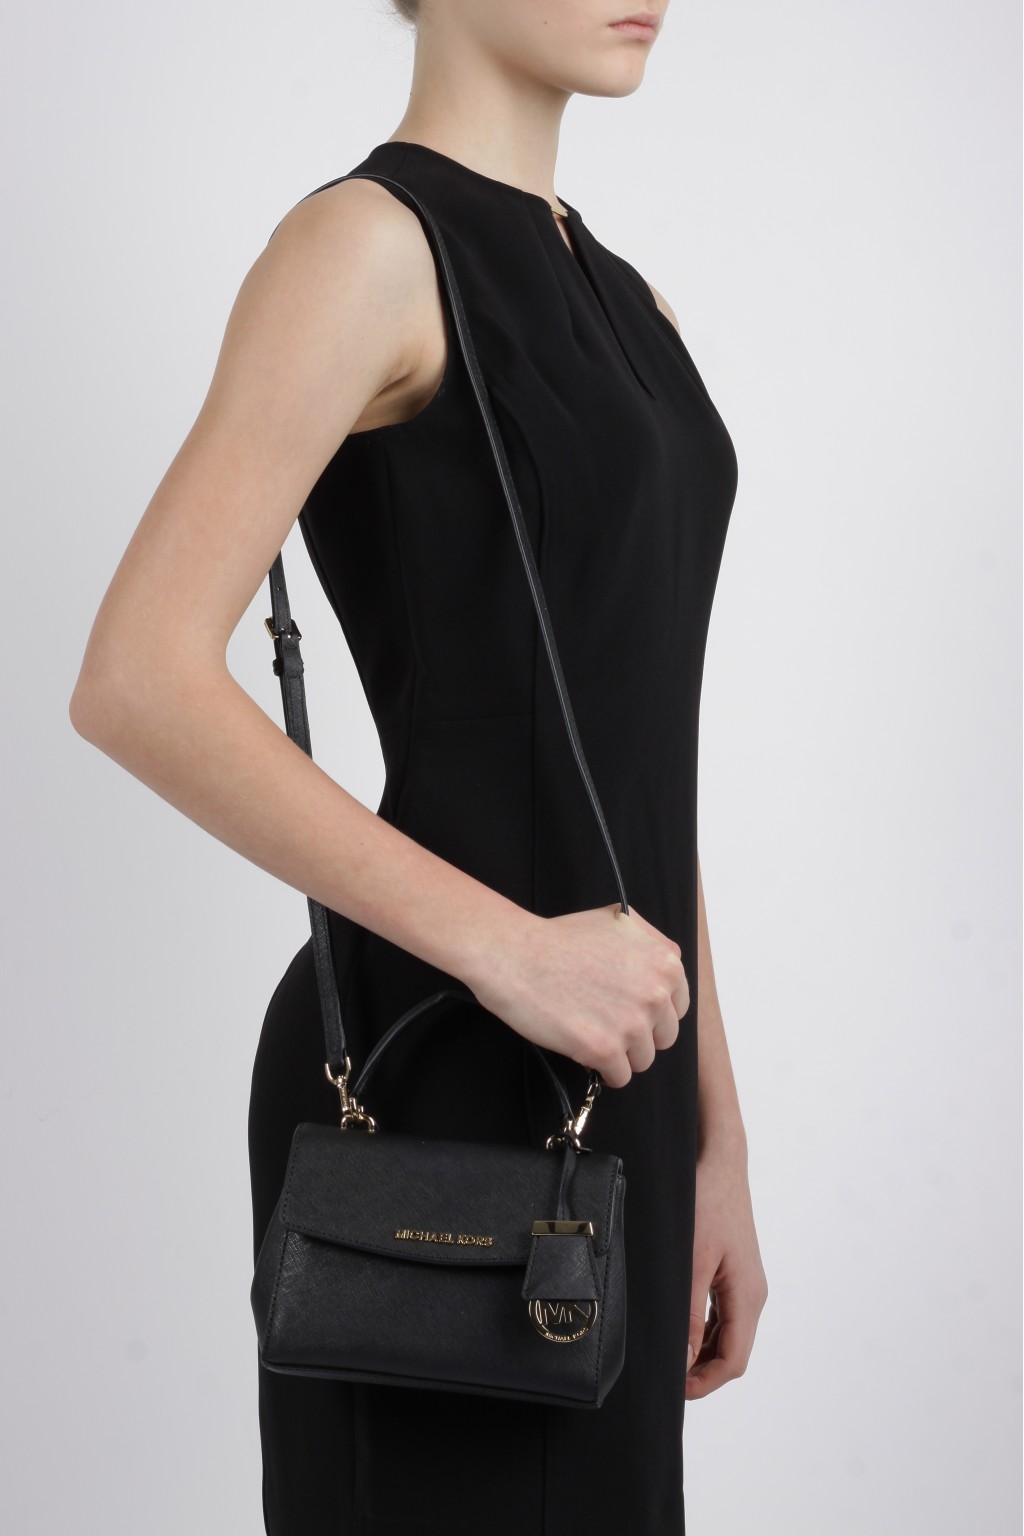 Michael Michael Kors 'Ava' Shoulder Bag, Women's Bags